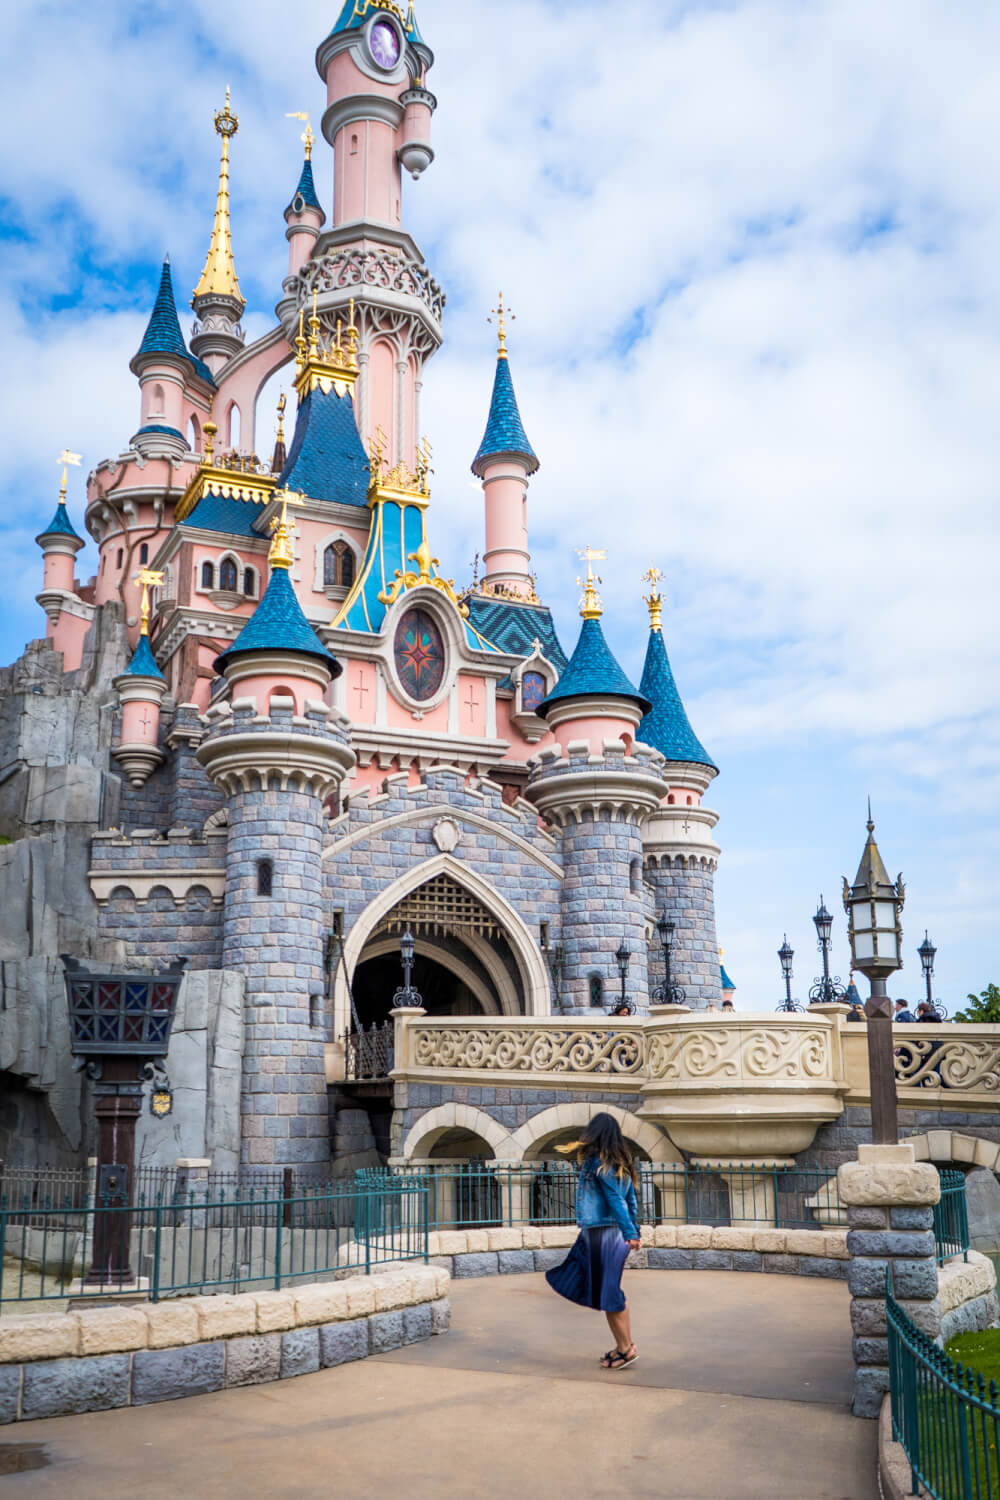 Disneyland Paris - Disney Castle, France